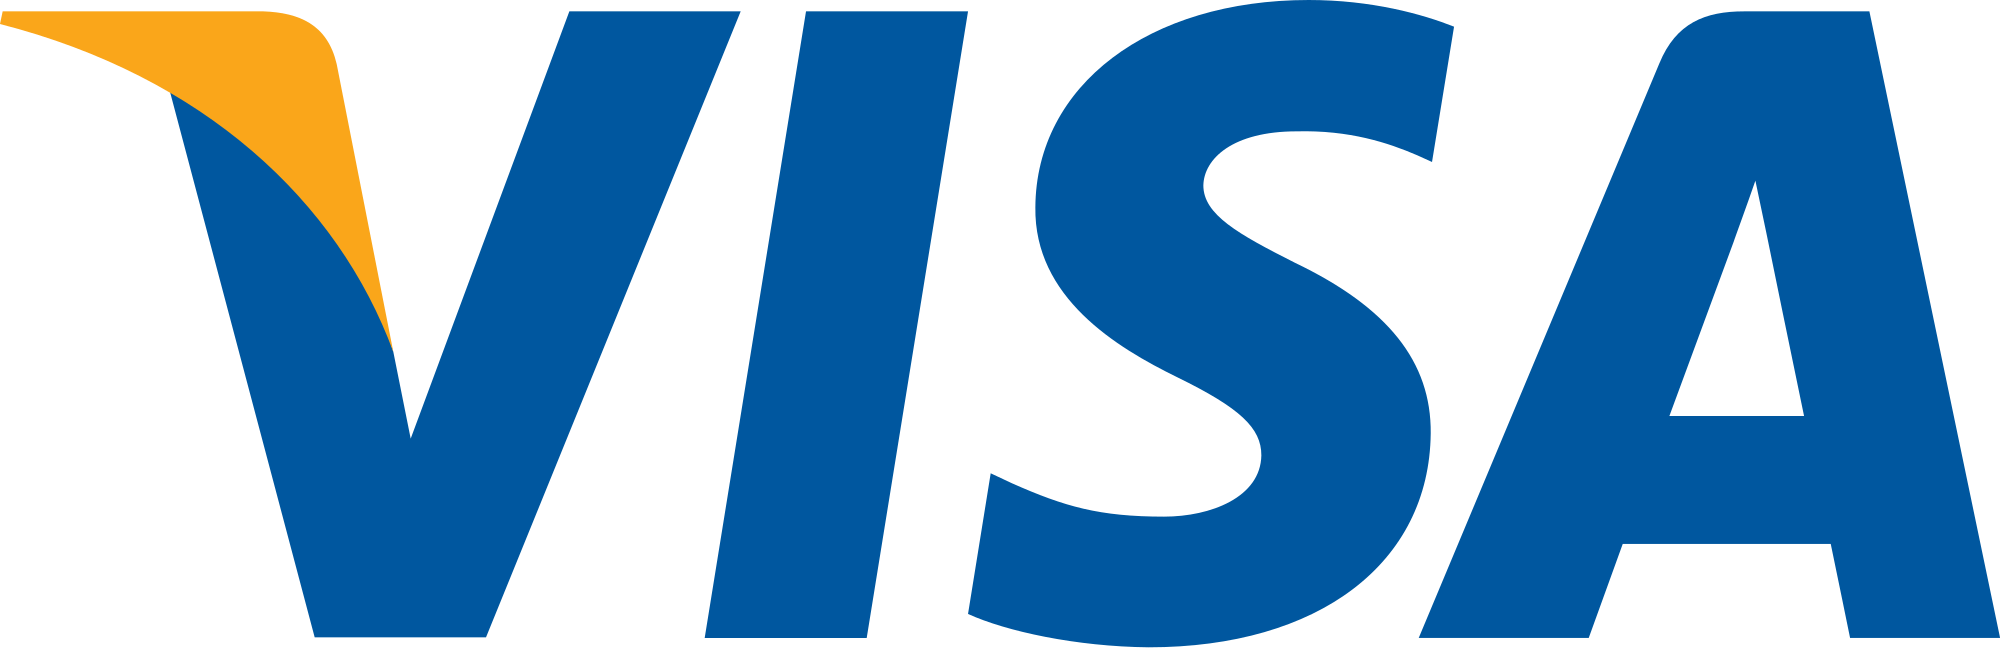 Visa Card Logo - File:Visa Inc. logo.svg - Wikimedia Commons